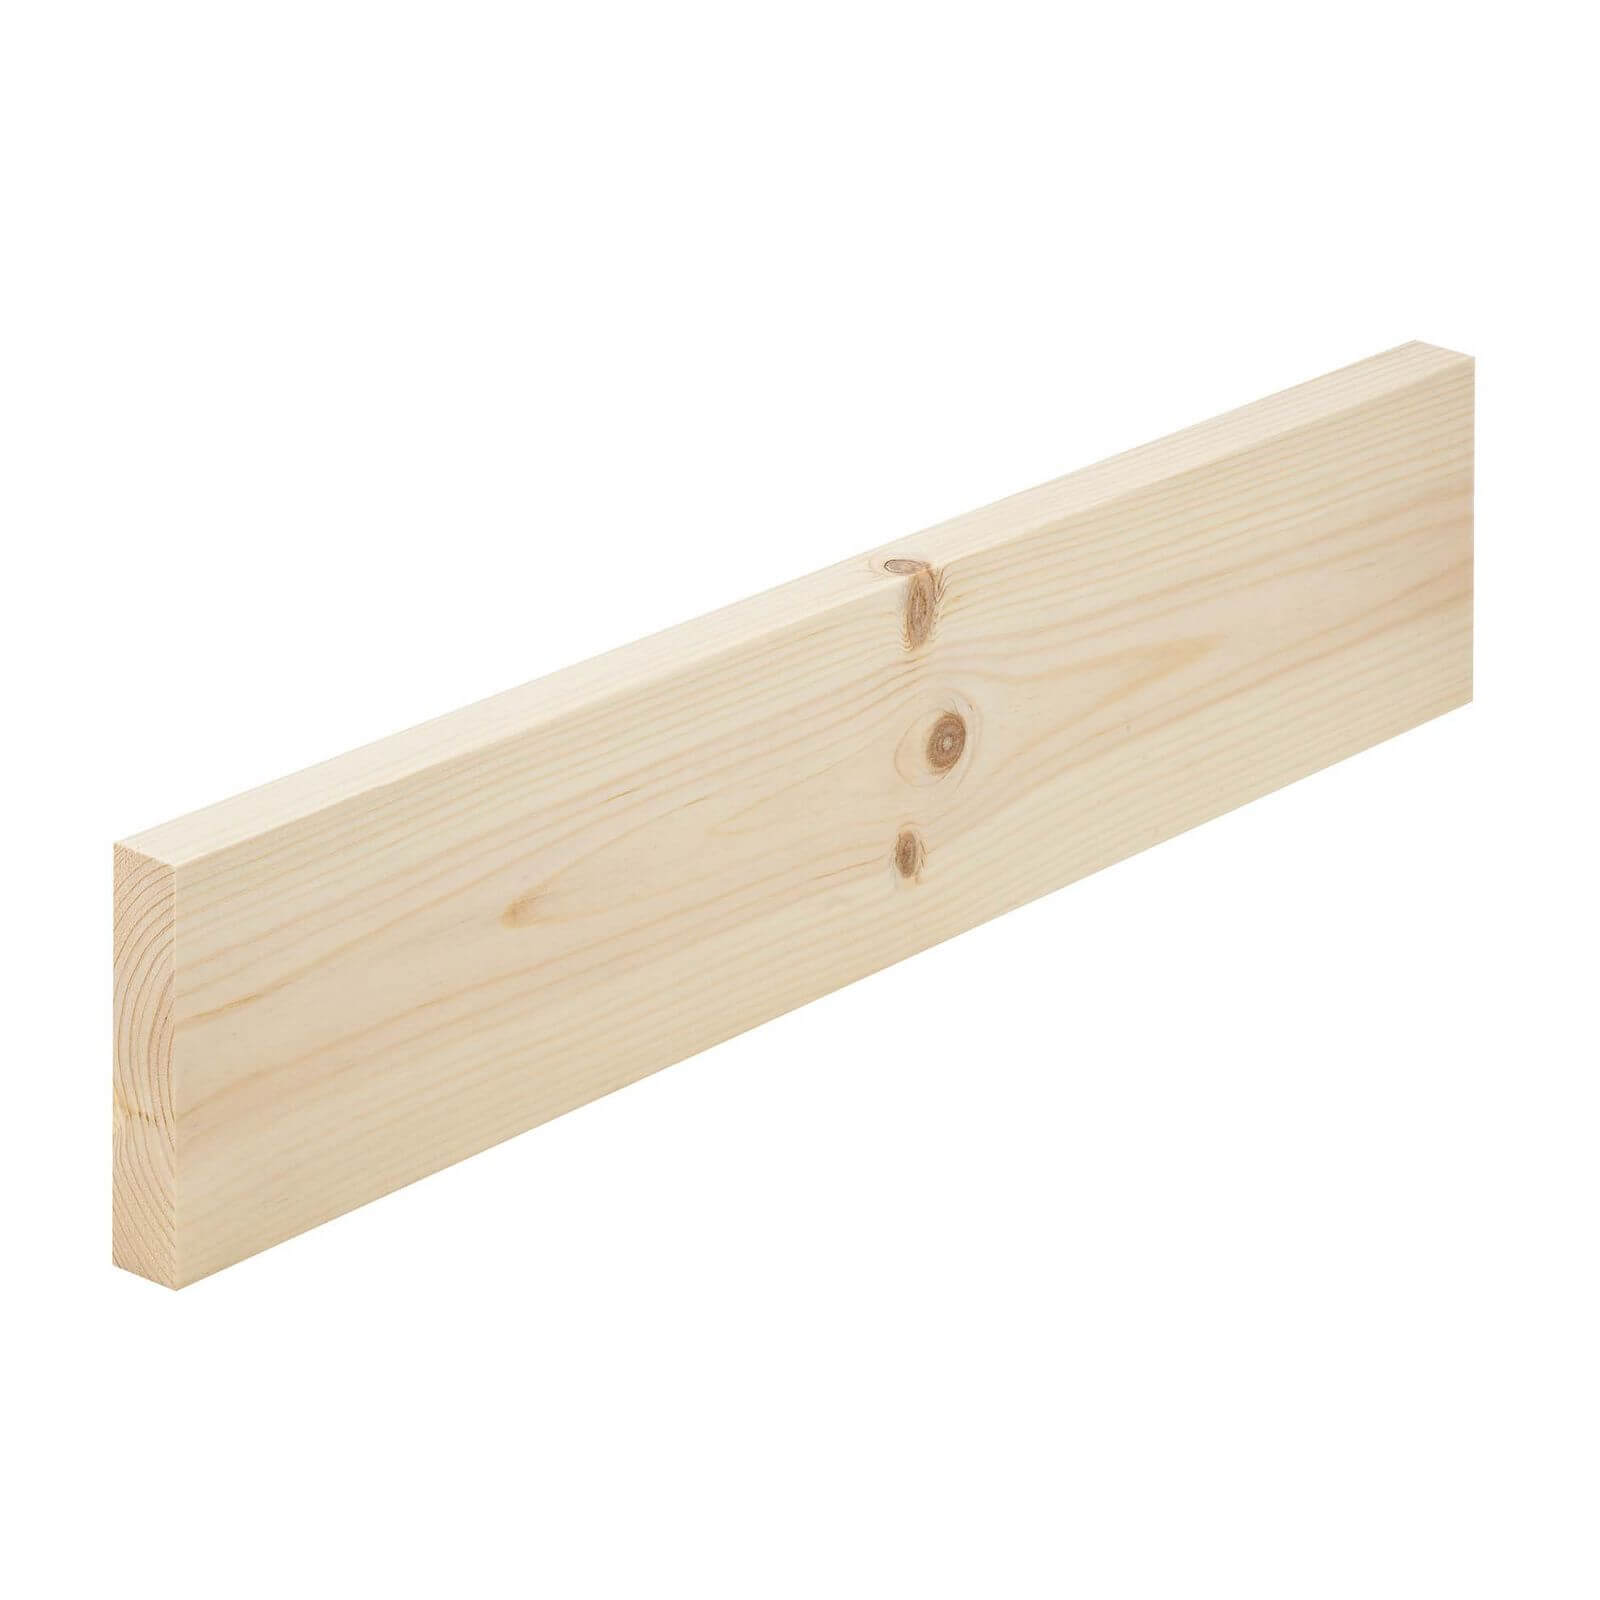 Metsa Planed Square Edge Stick Softwood Timber 1.8m (18 x 94 x 1800mm)